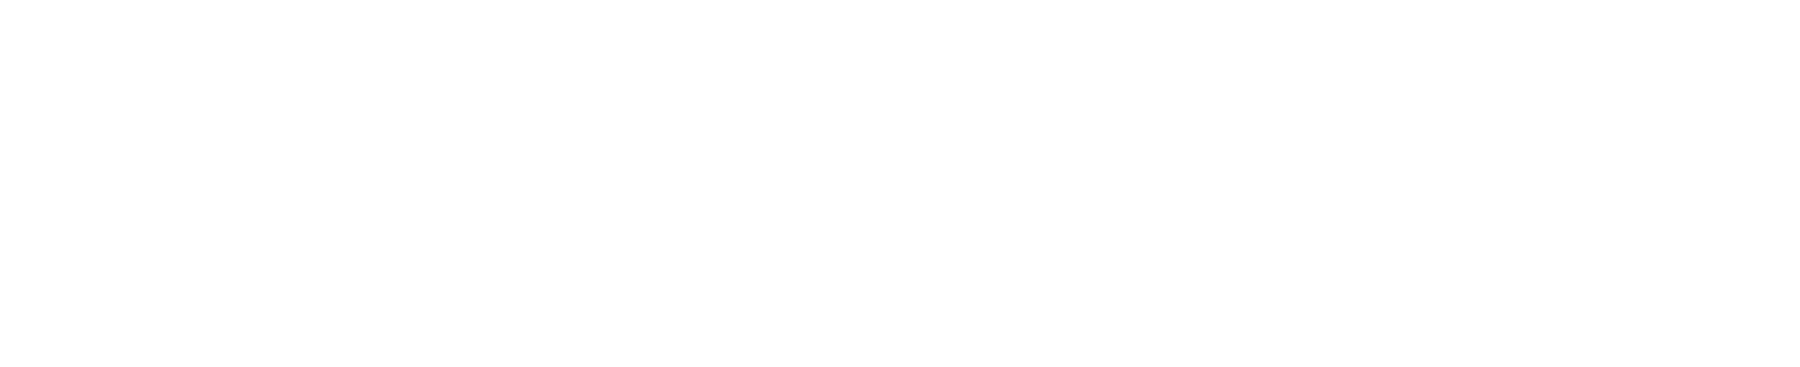 Sigma Pi Alpha Iota Chapter logo